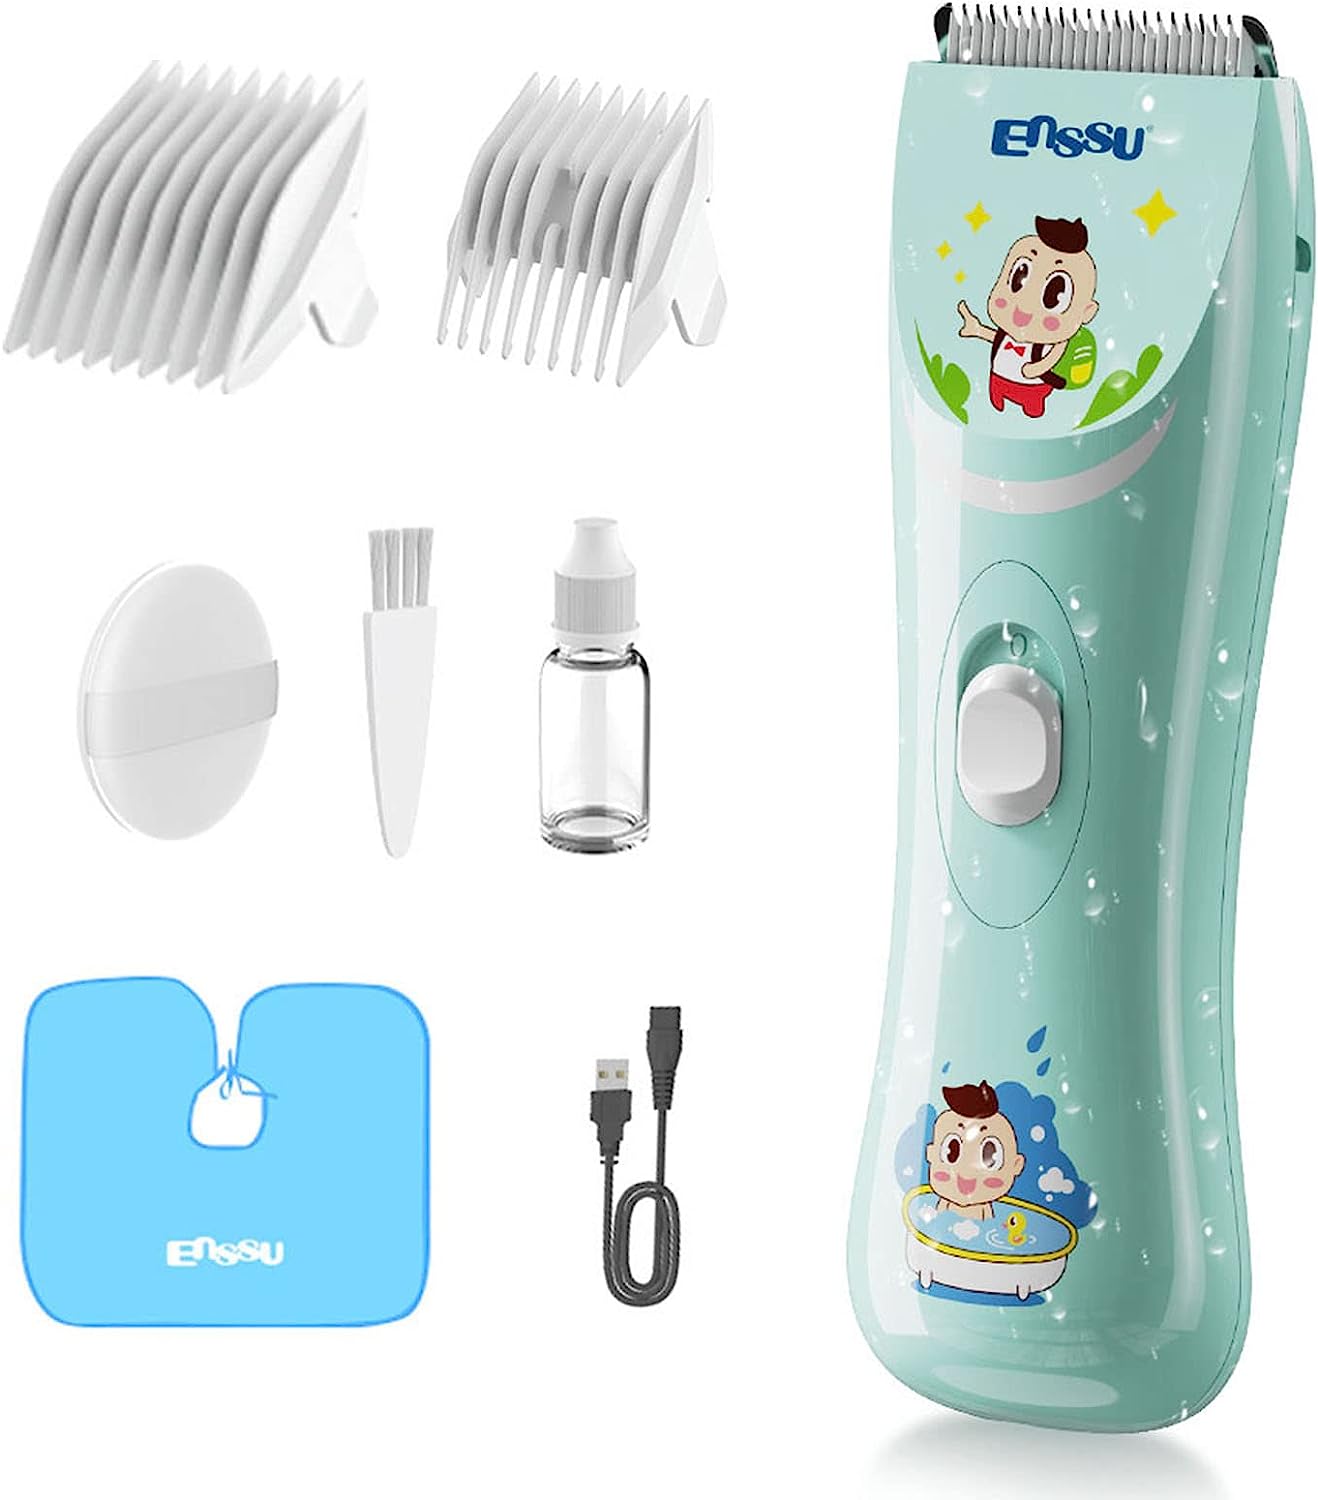 ENSSU Electronic Baby Hair Clipper, Waterproof Kids Quiet Hair Trimmer